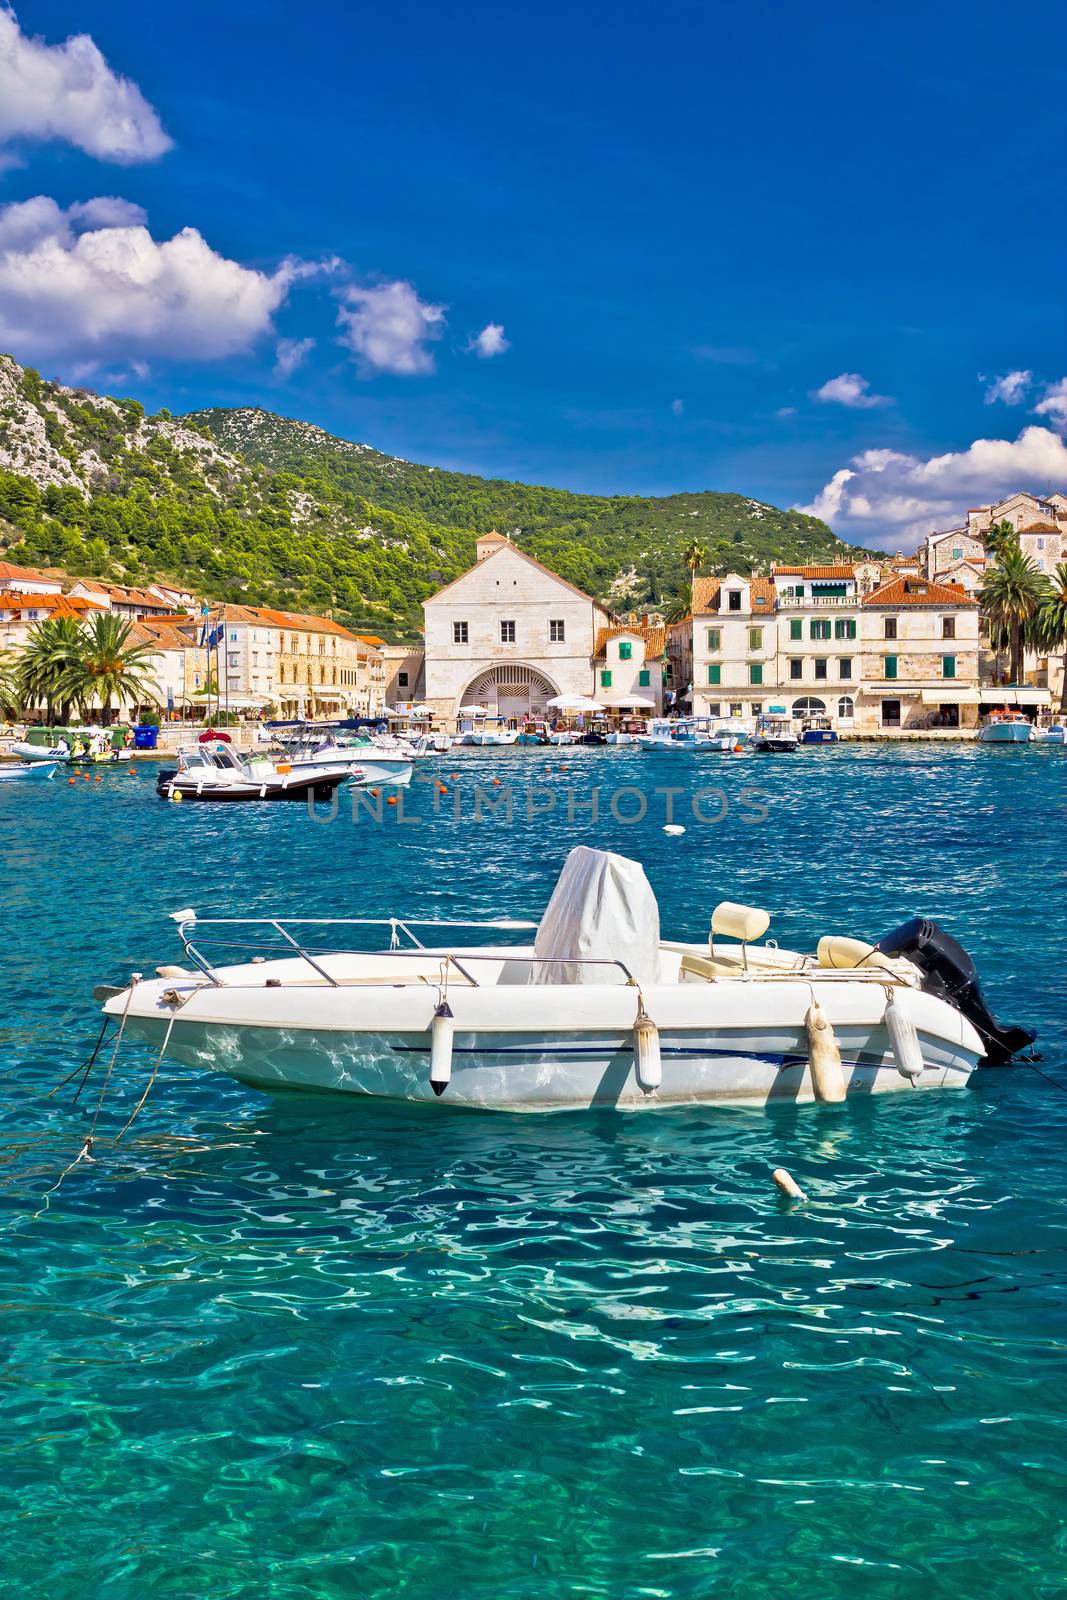 Turquoise Hvar island waterfront view, Dalmatia, Croatia